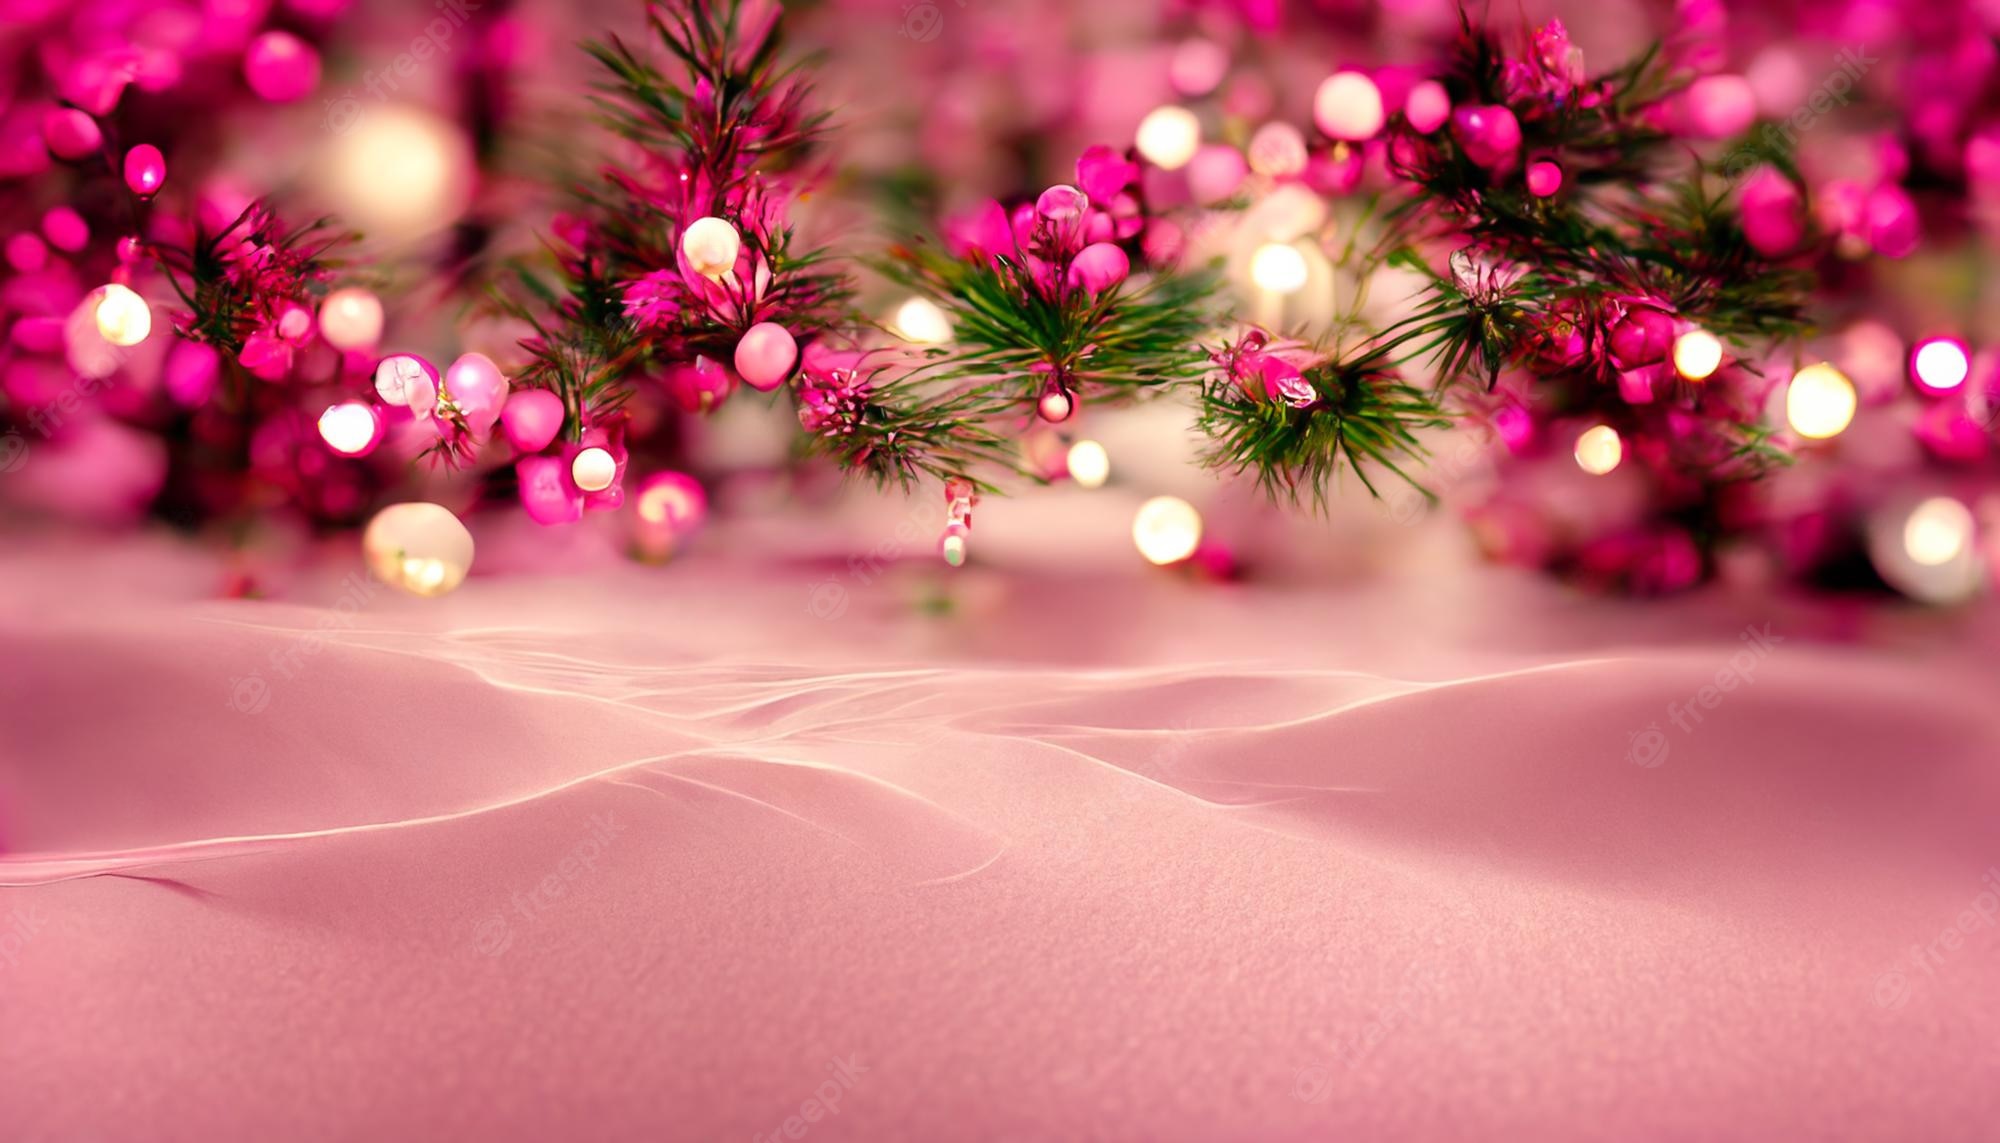 Premium Photo. Merry christmas HD pink wallpaper beautiful artwork seasonal illustration and copy space background